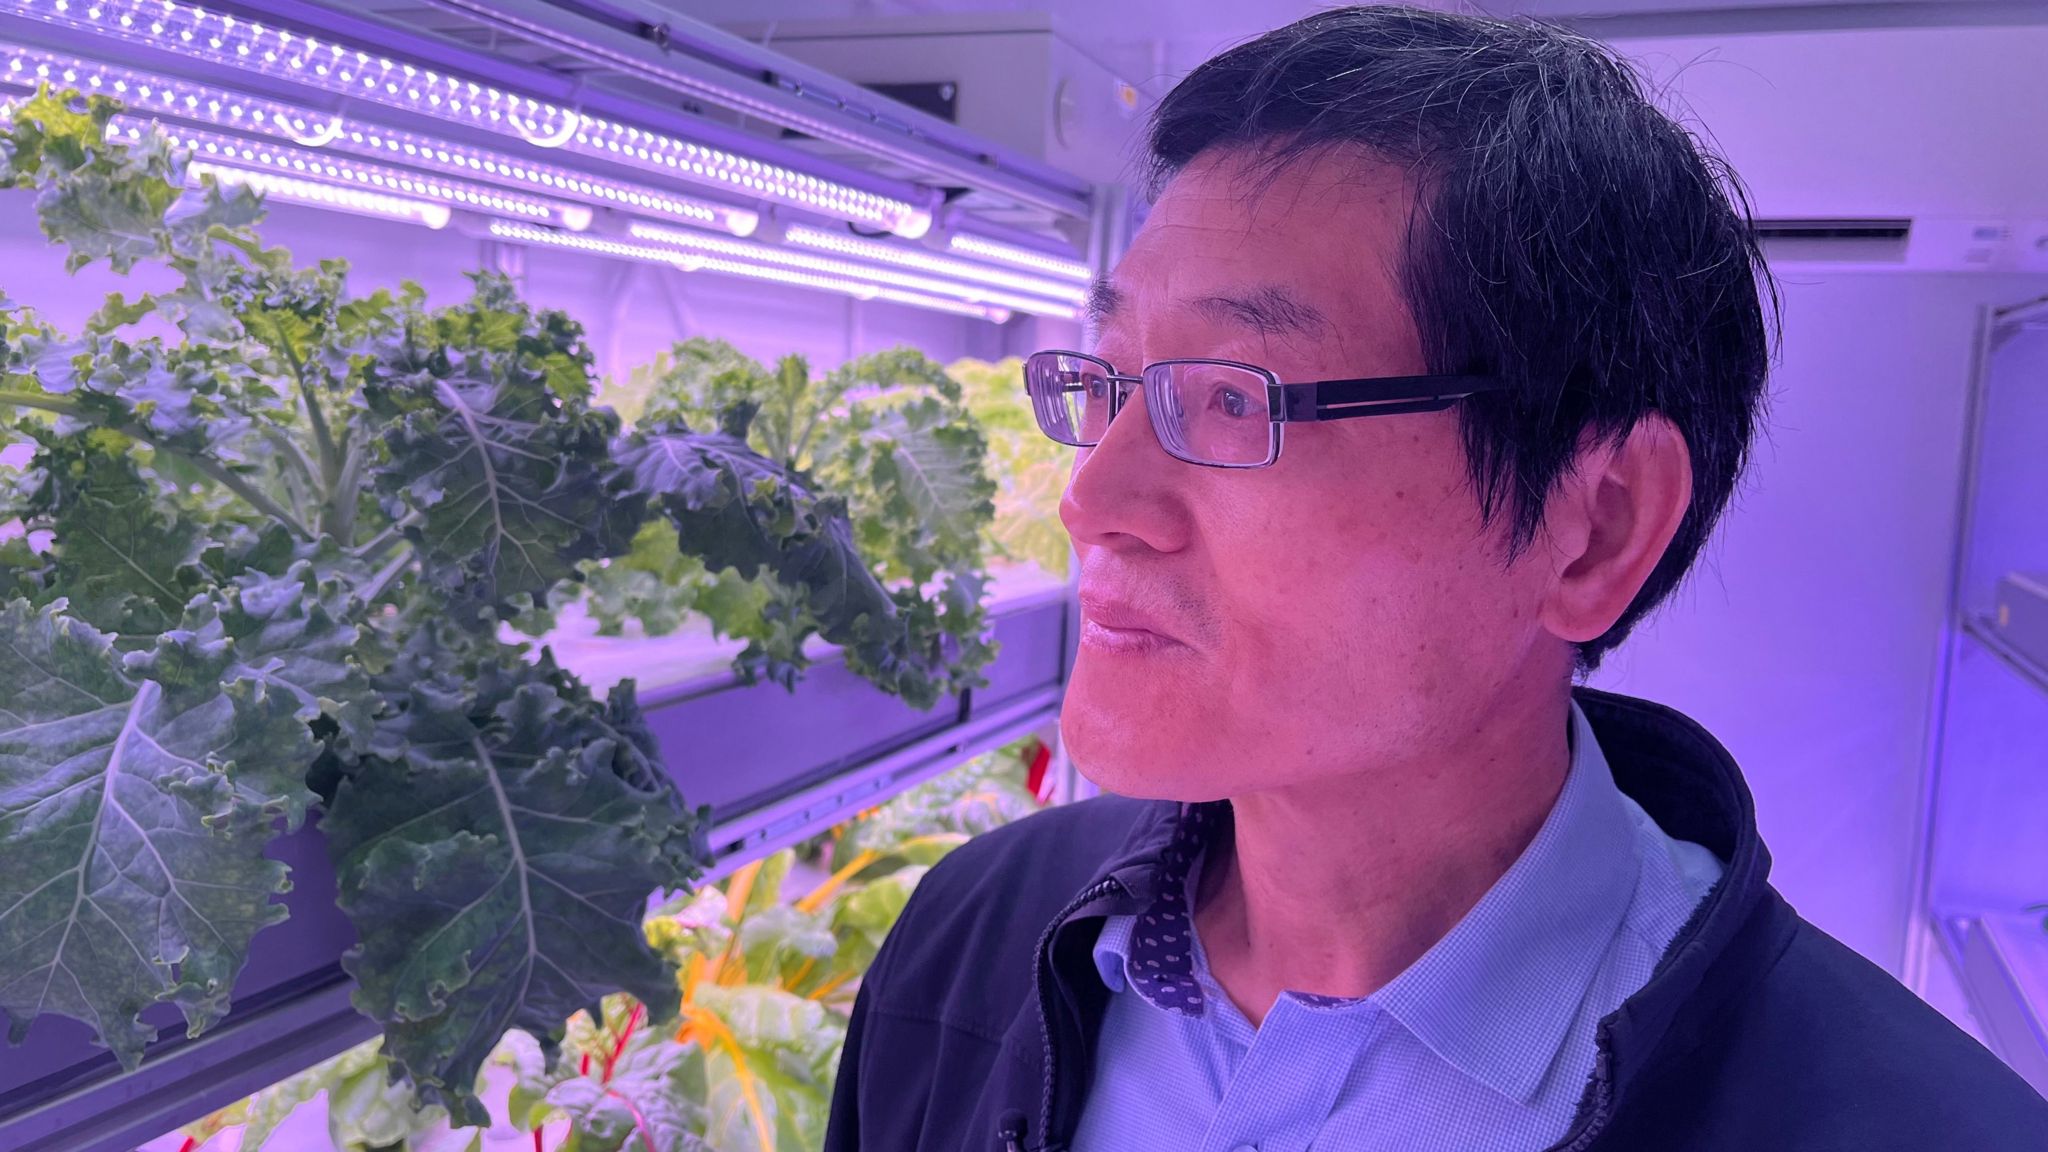 Professor Lu examines crops in a vertical farm